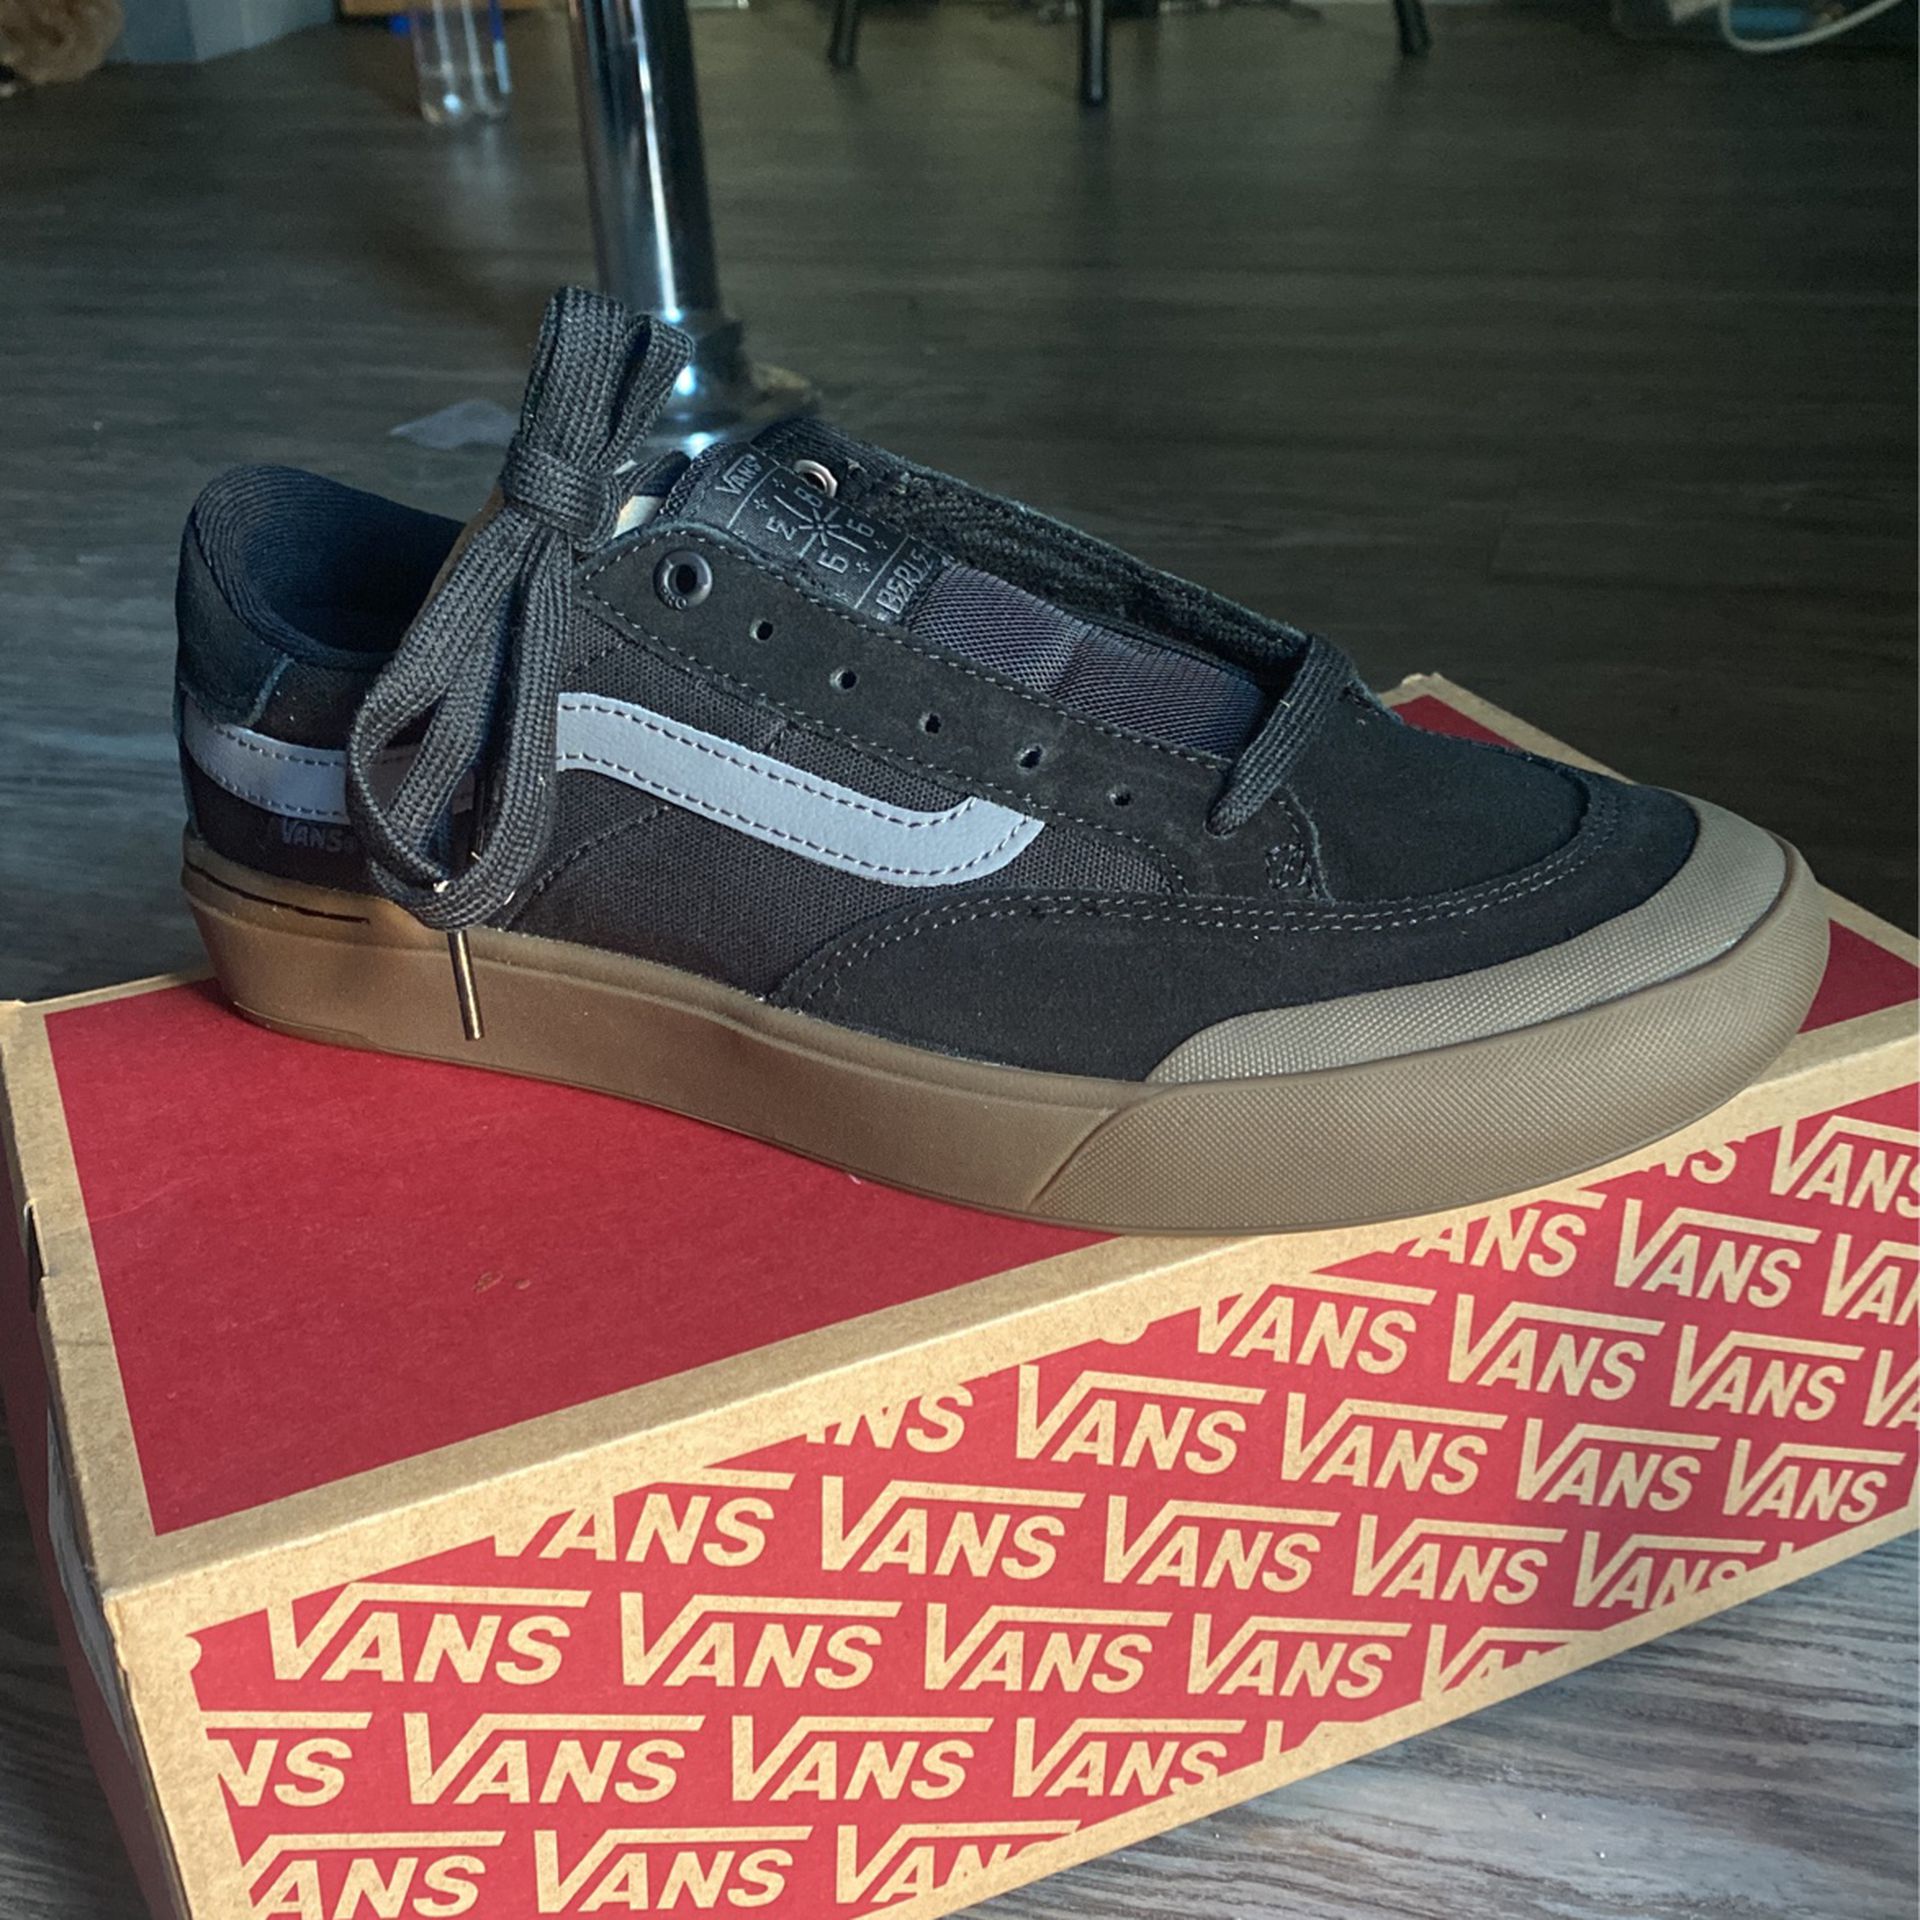 Vans PRO Skate Shoes Mens Black/Grey- BRAND NEW IN BOX